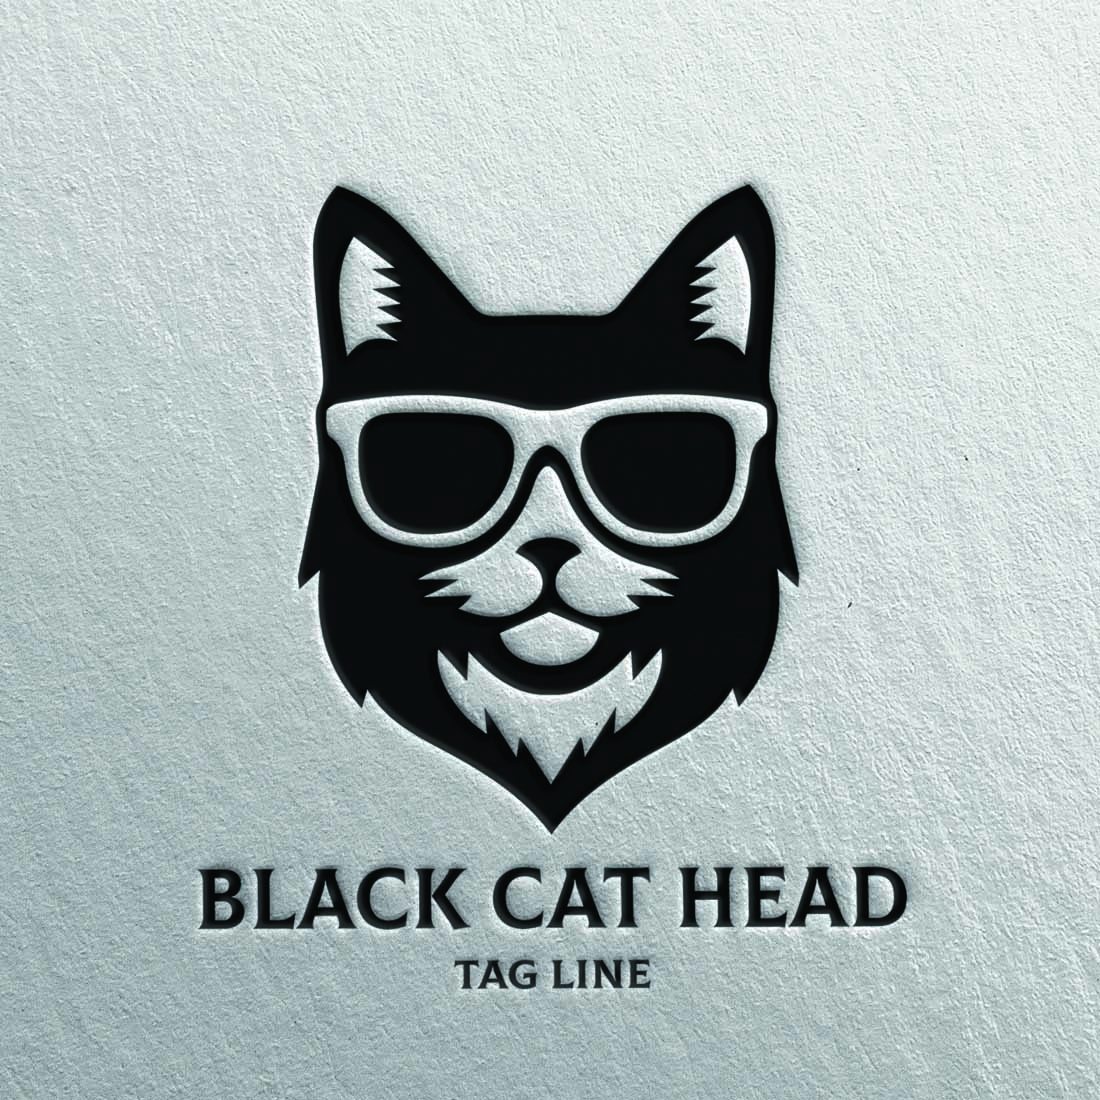 Black Cat Head Logo preview image.